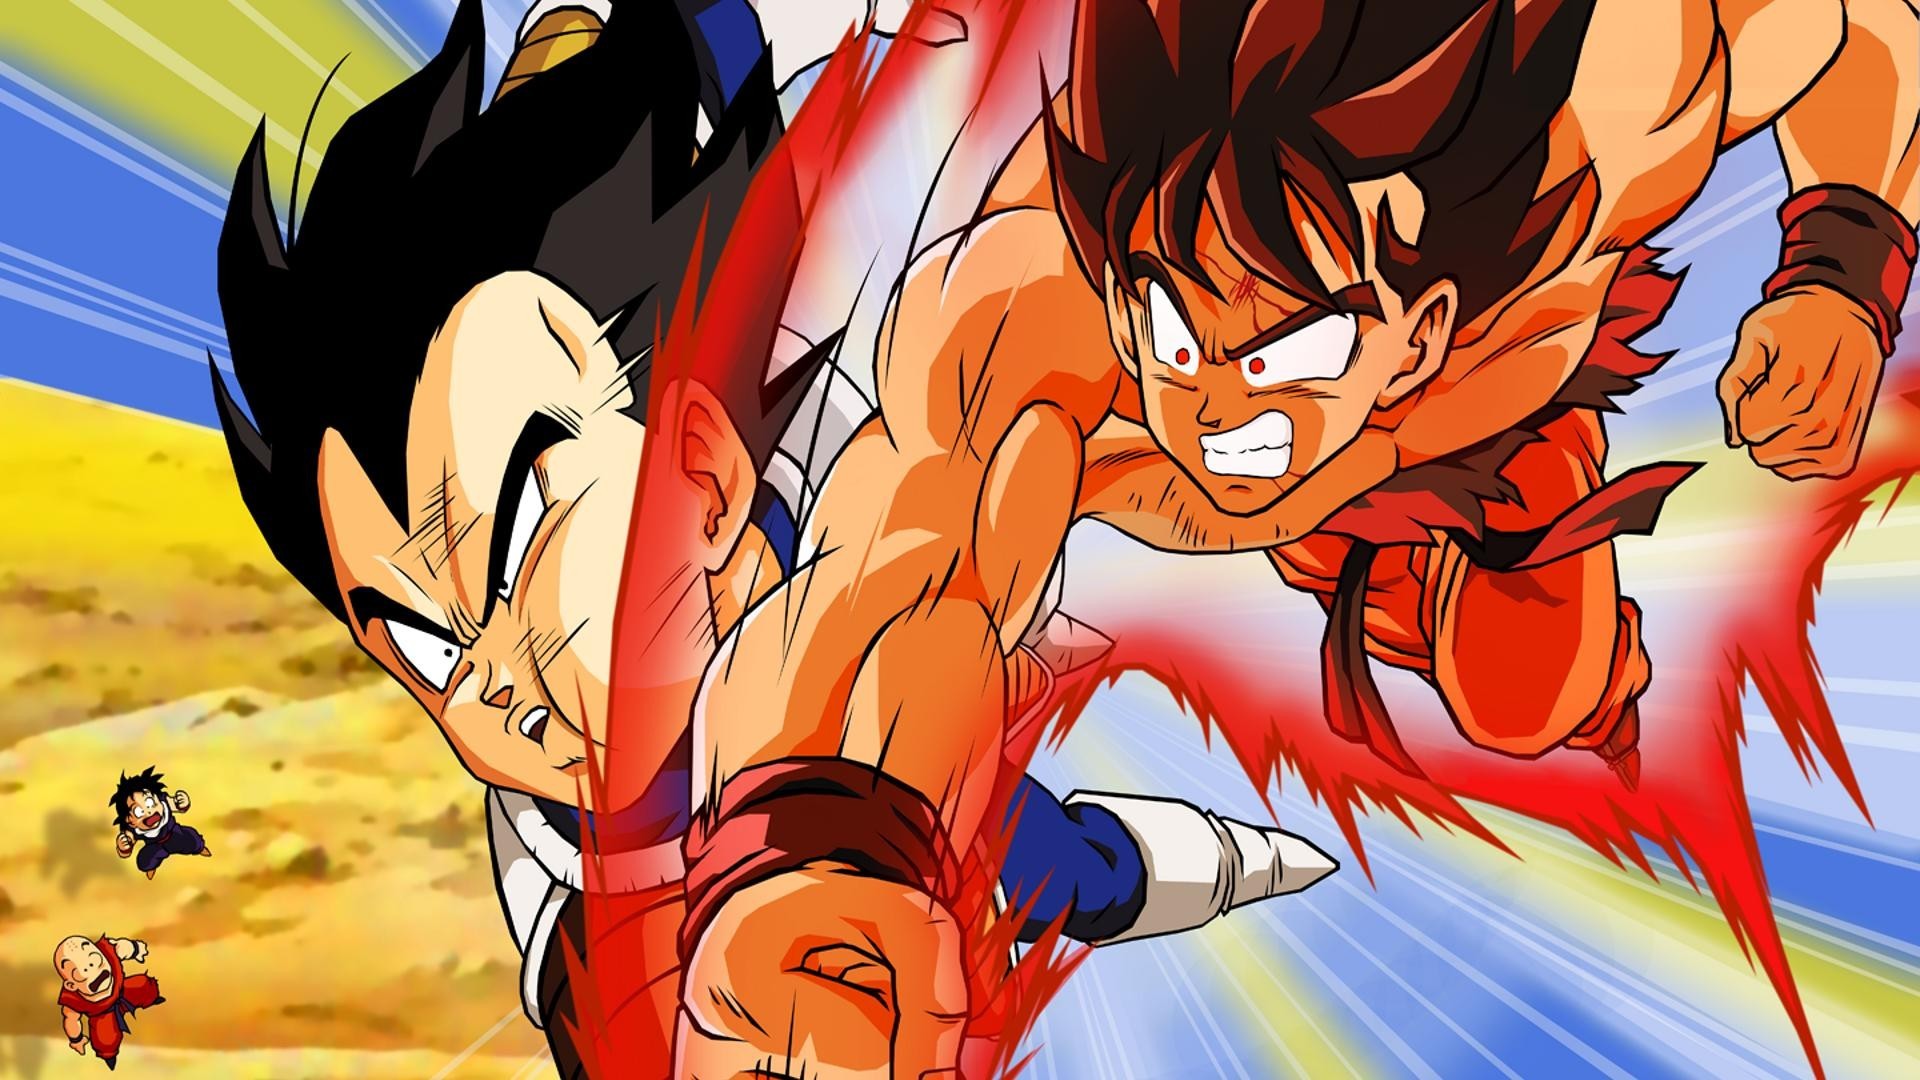 Goku Vs Vegeta Wallpaper Image